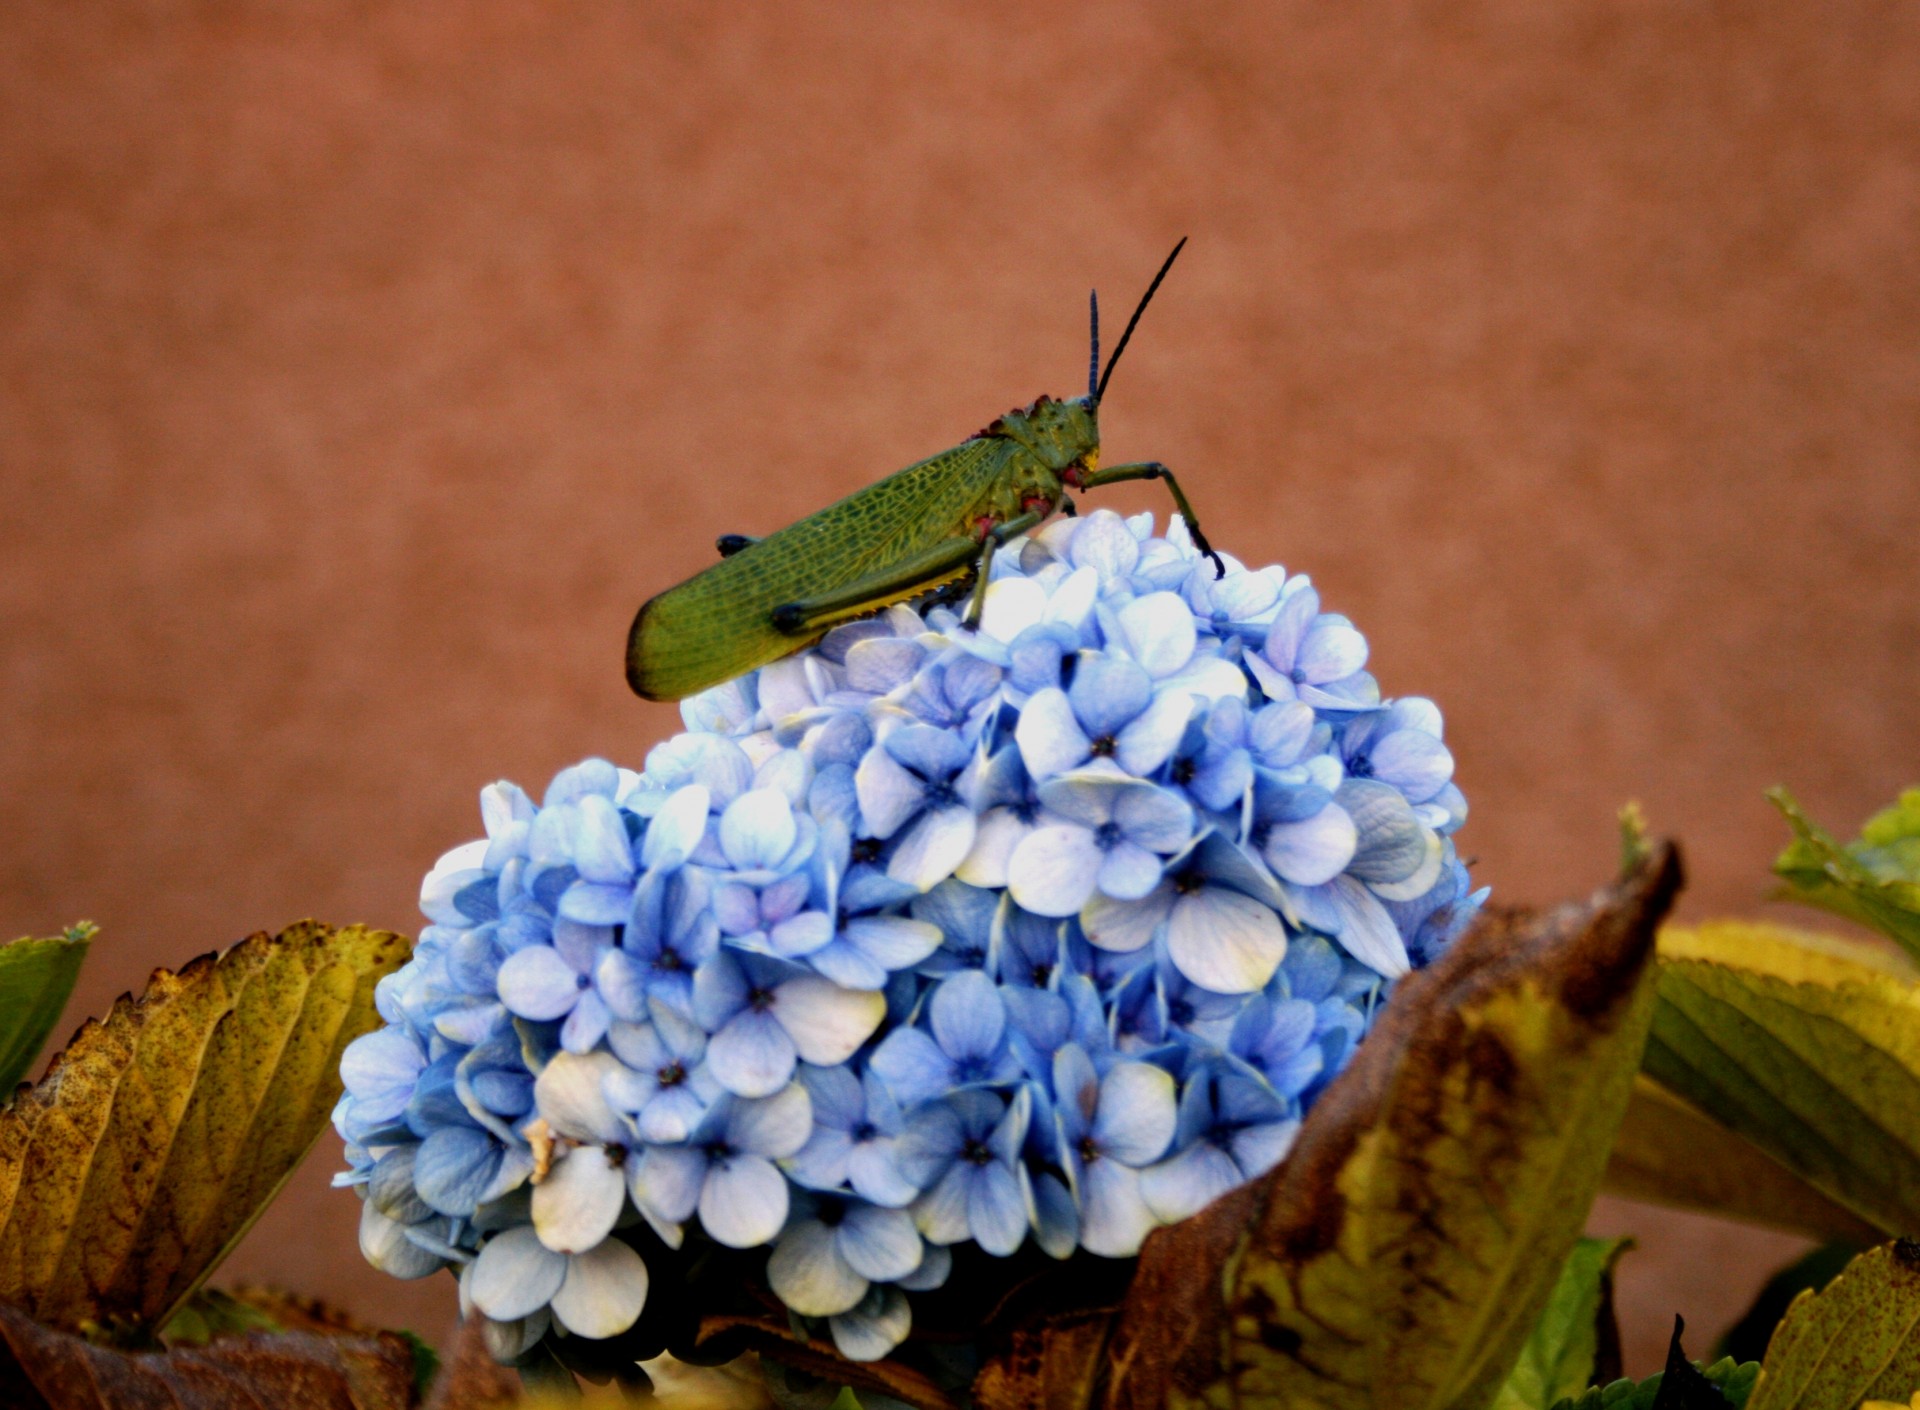 green grasshopper perched on blue hydrangea